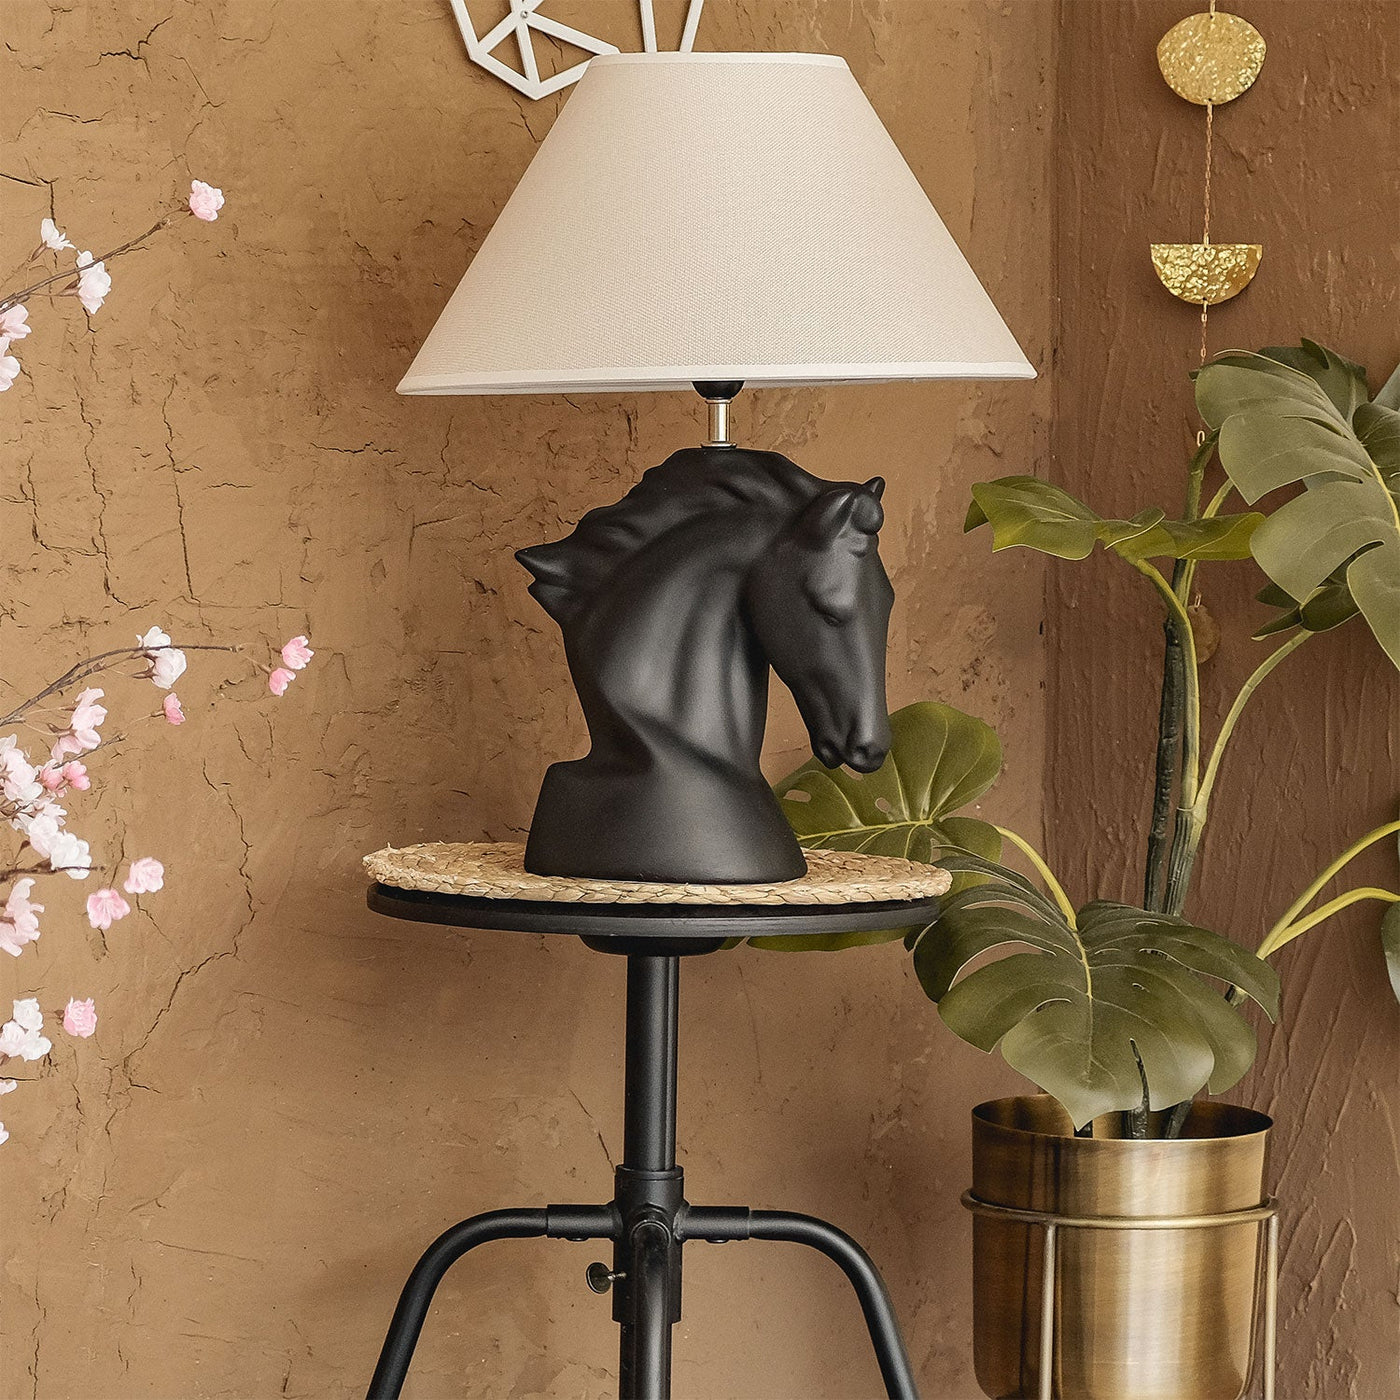 Horse Black Table Lamp